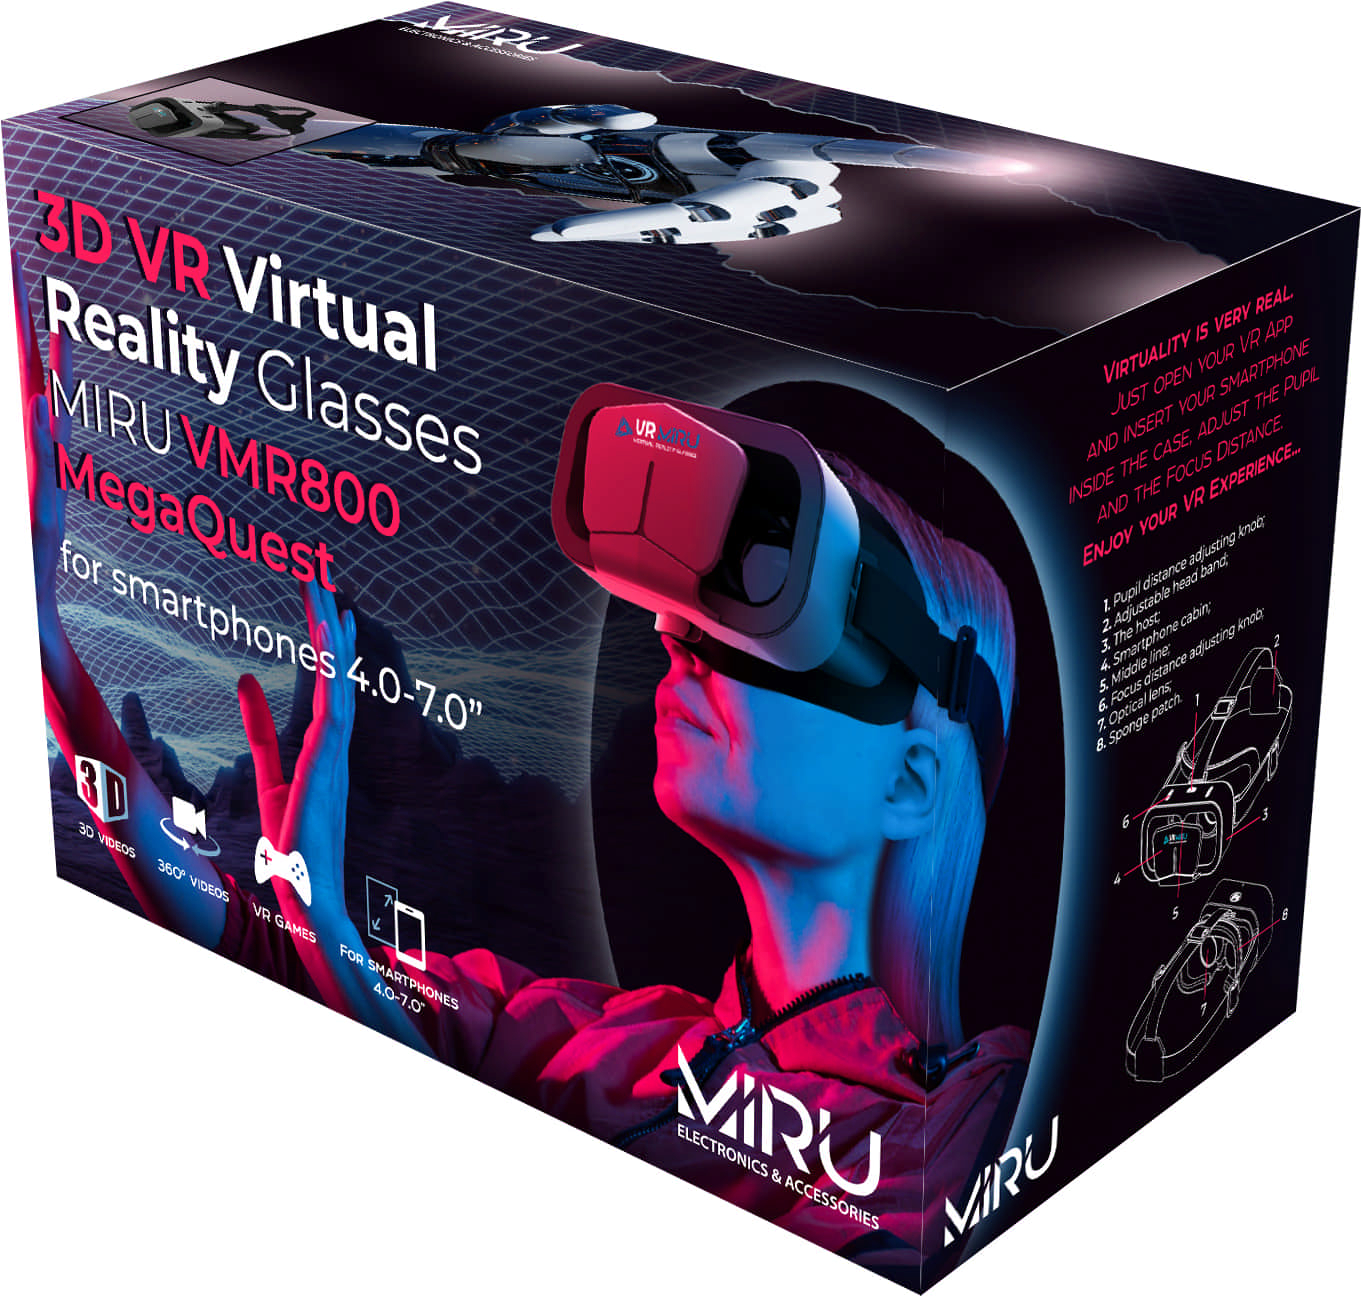 Oчки виртуальной реальности MIRU VMR800 Mega Quest - Фото 11